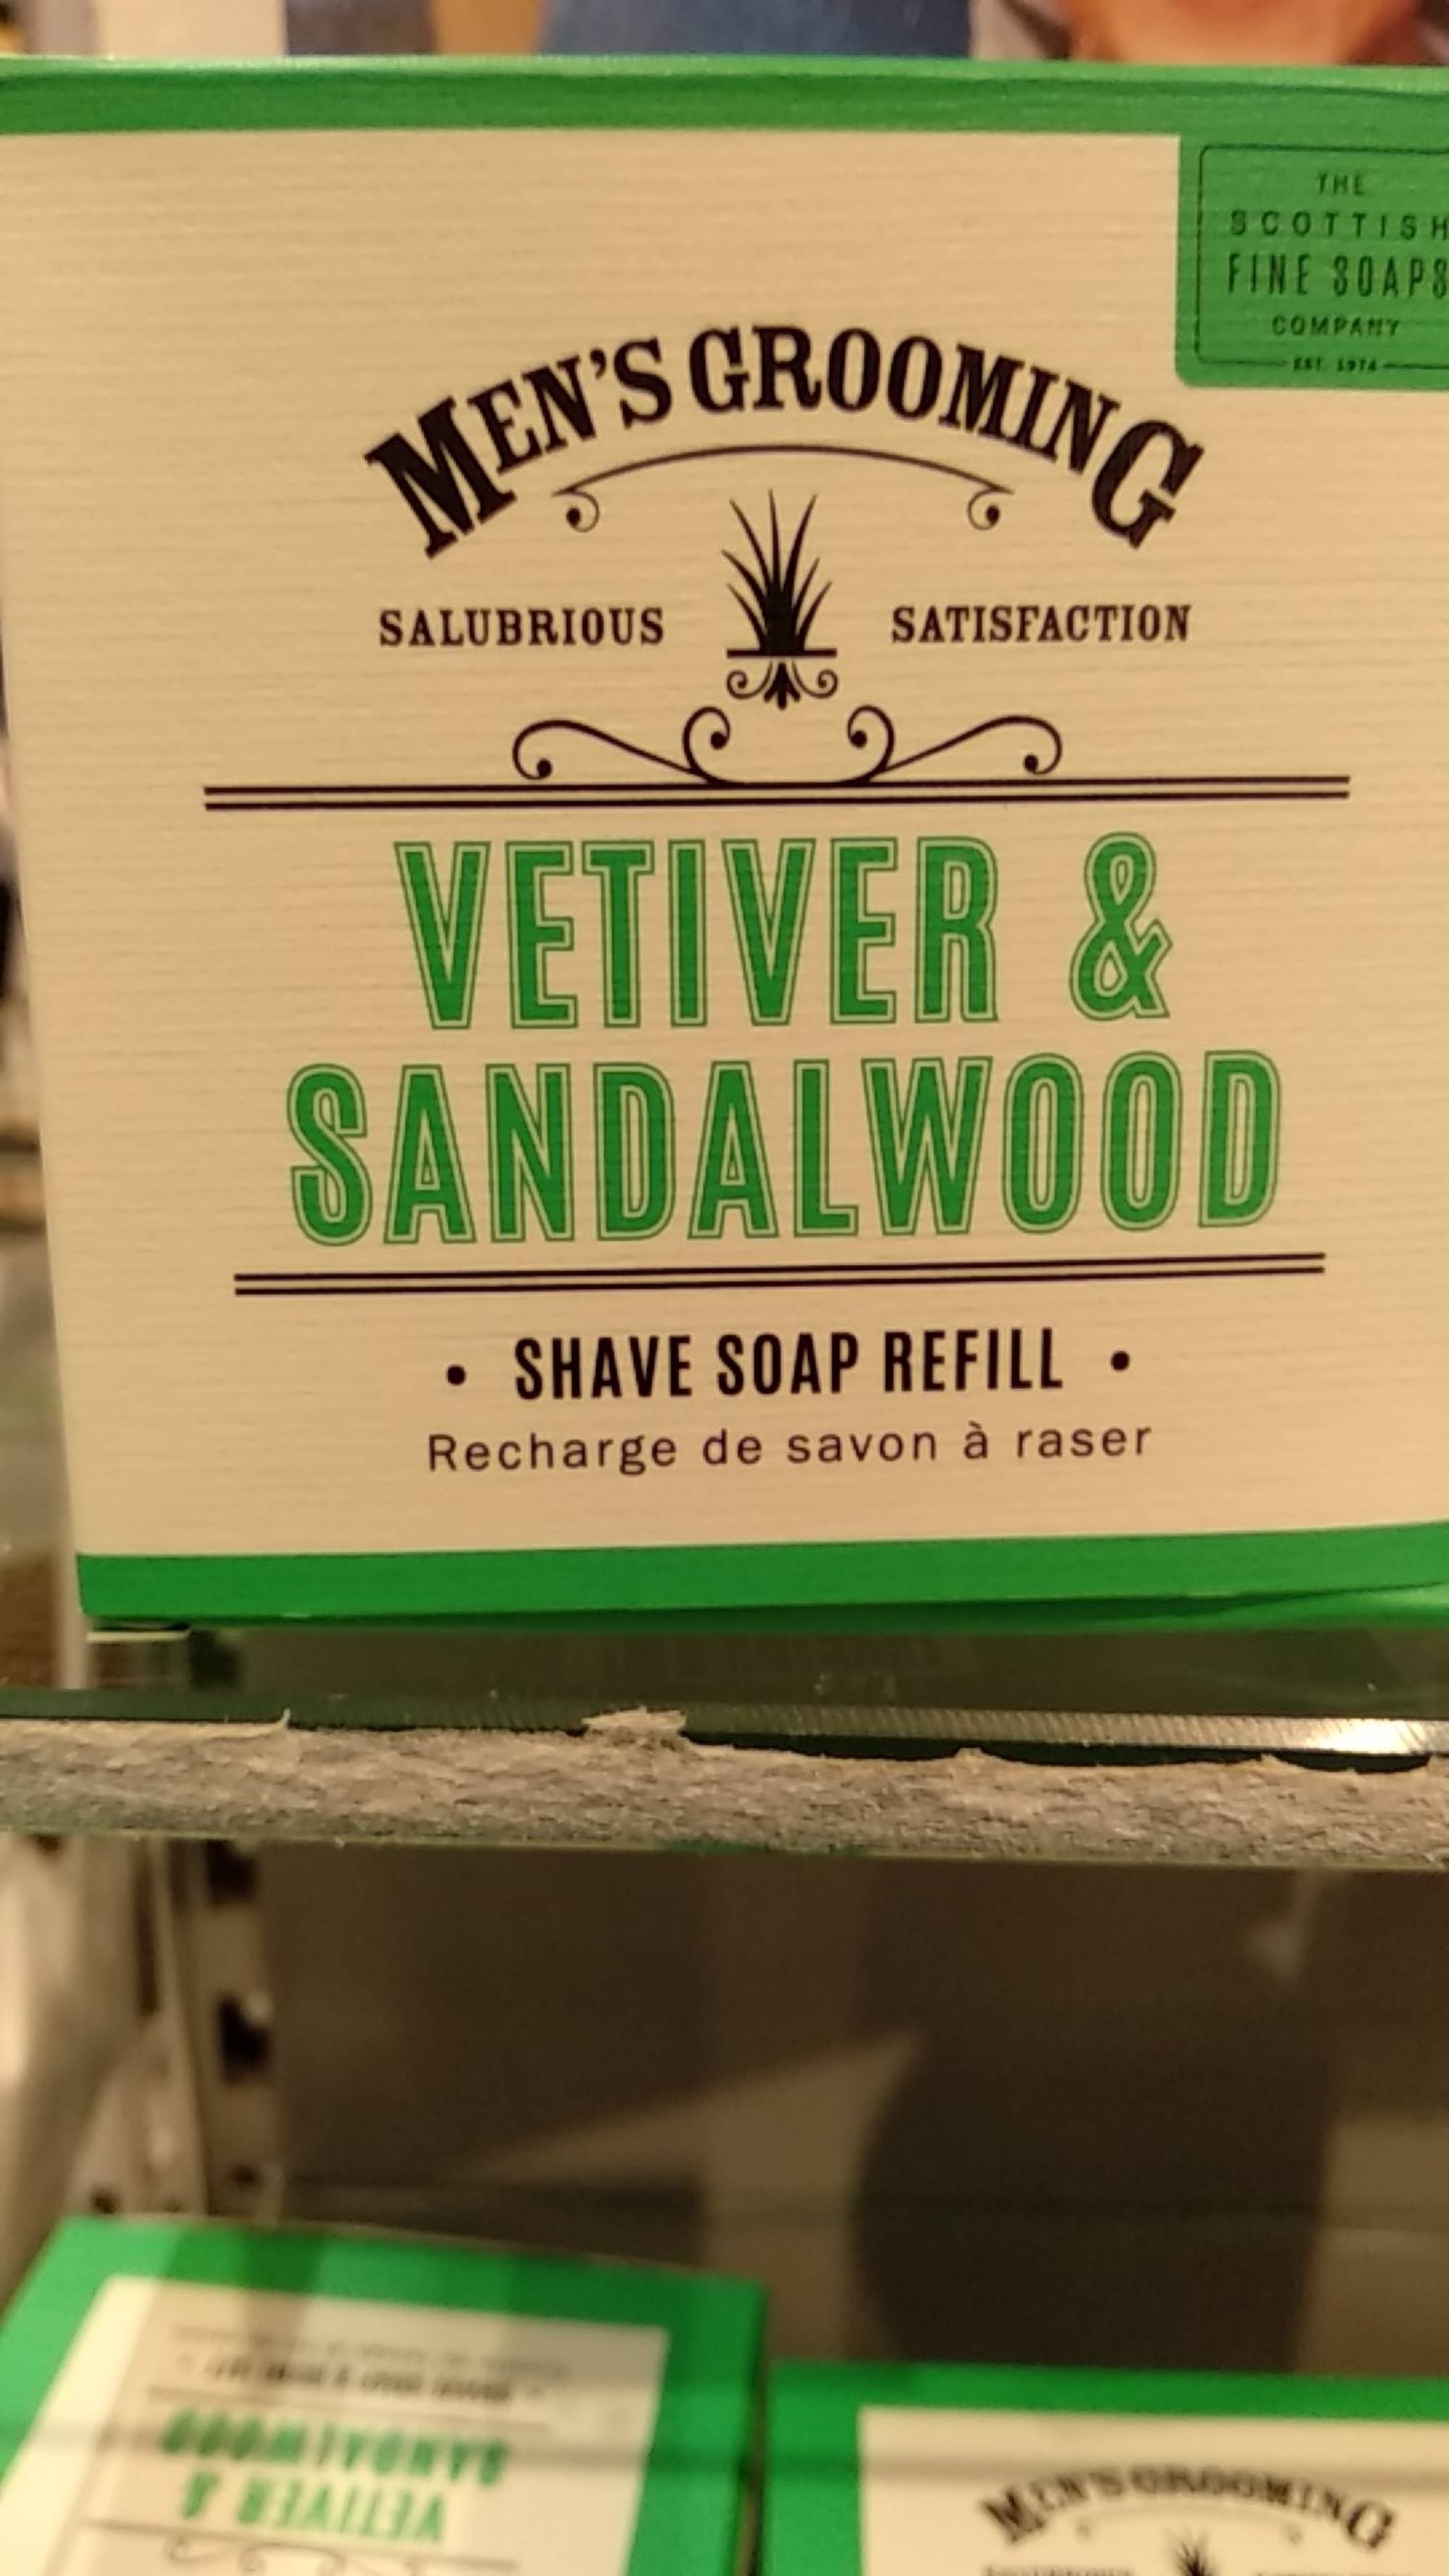 THE SCOTTISH FINE SOAPS COMPANY - Vetiver & Sandalwood - Recharge de savon à raser